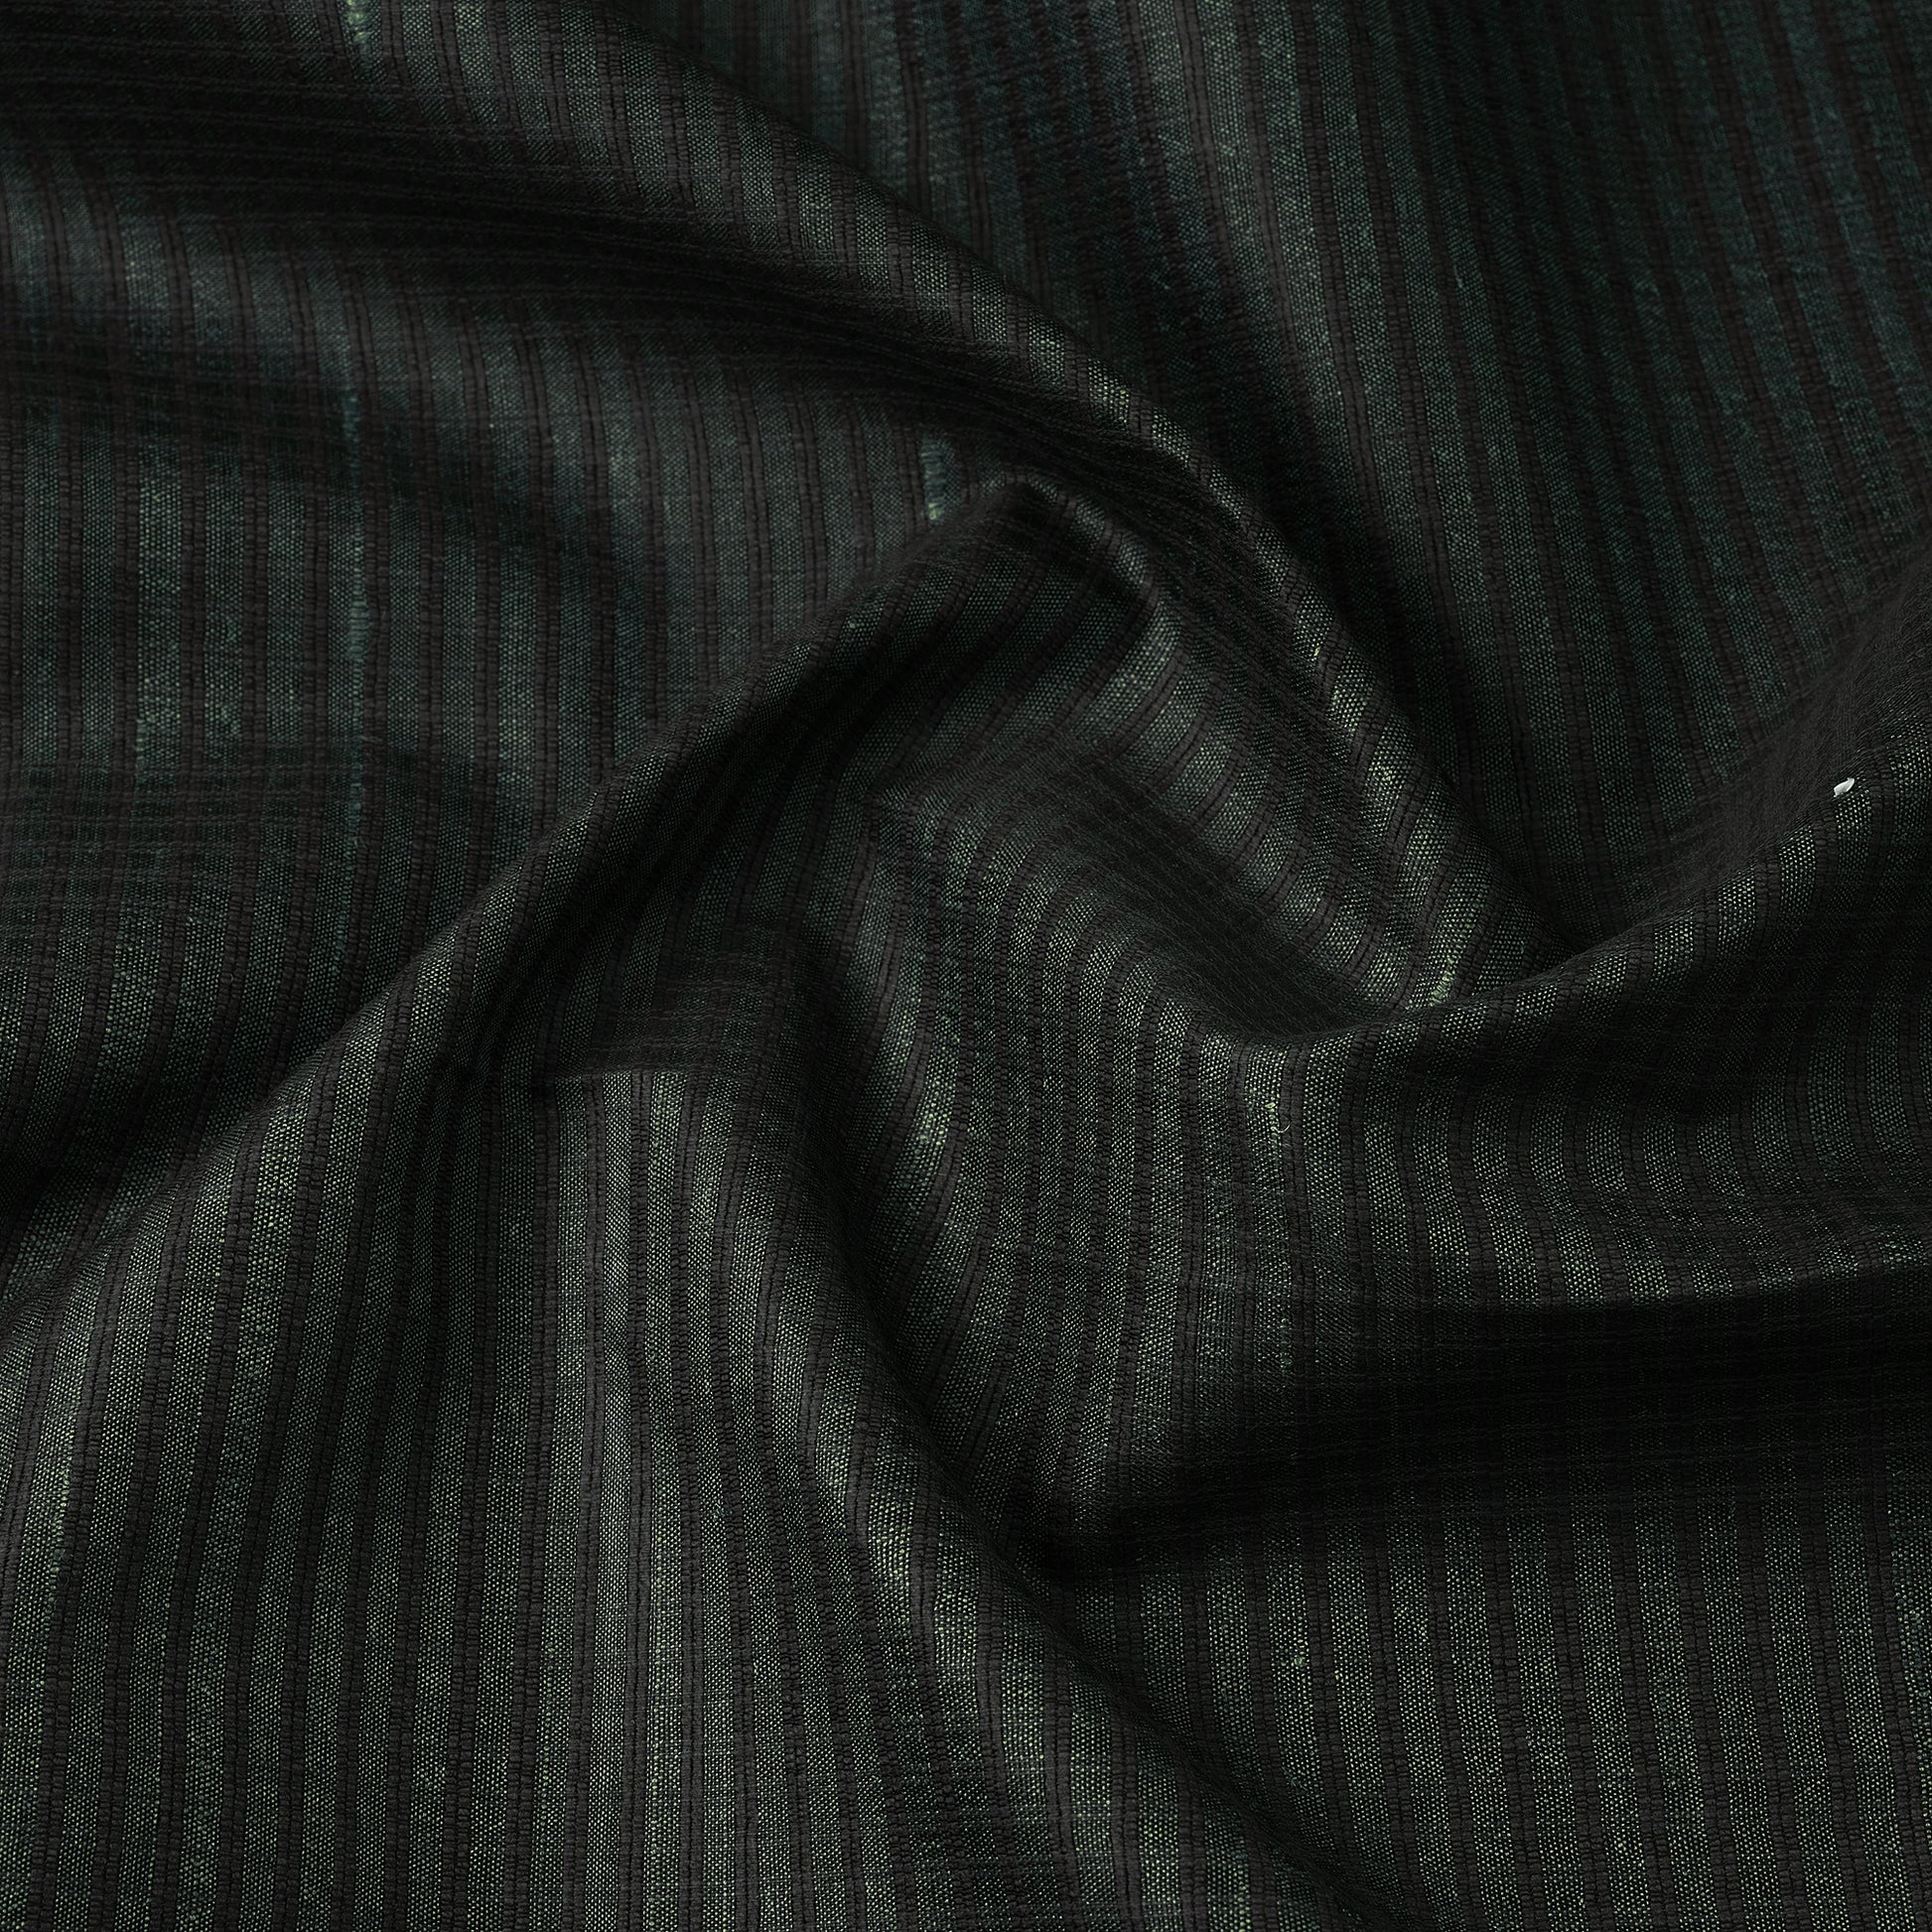 plain fabric